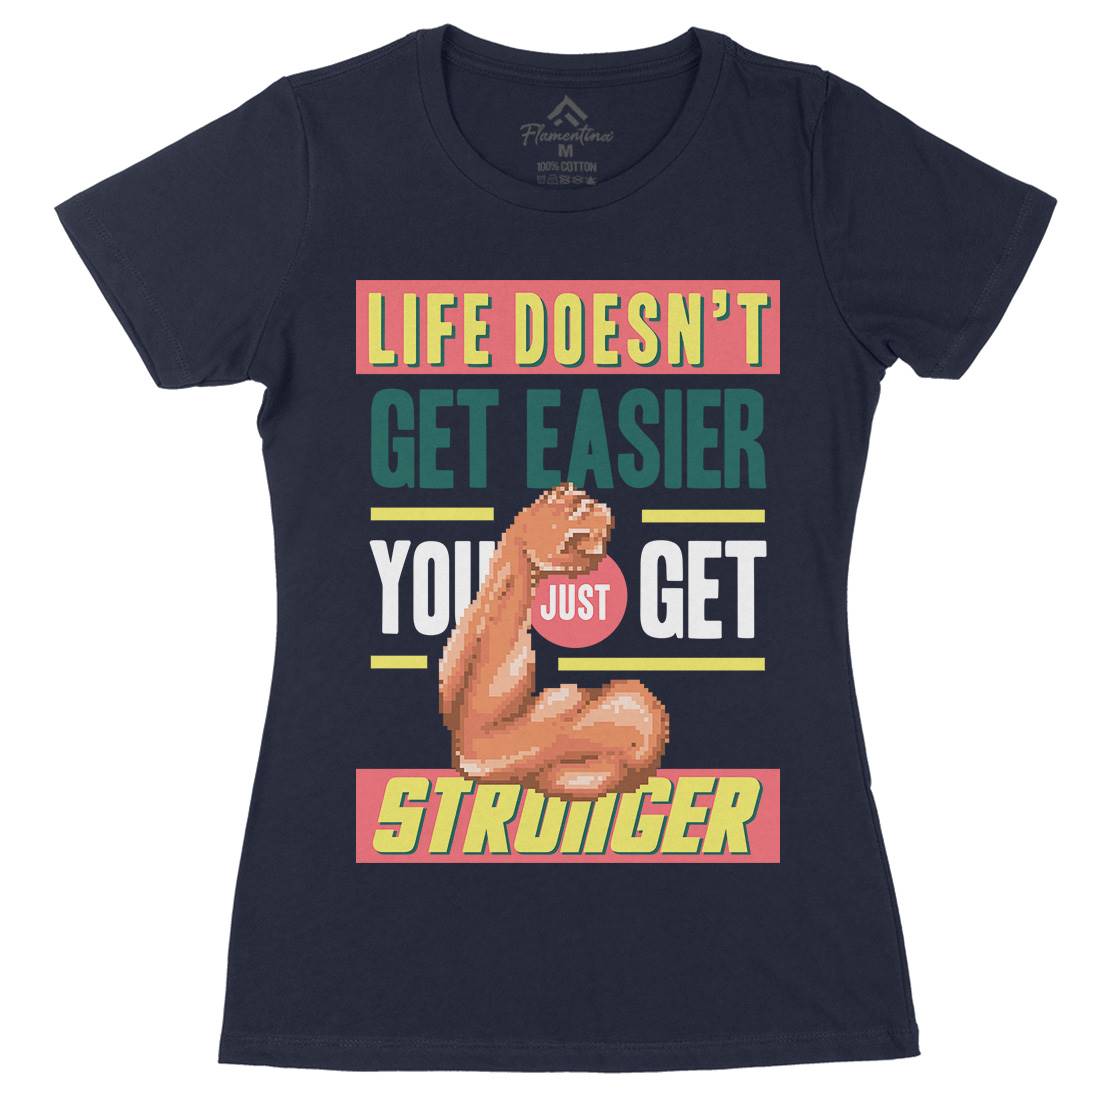 Get Stronger Womens Organic Crew Neck T-Shirt Gym B904